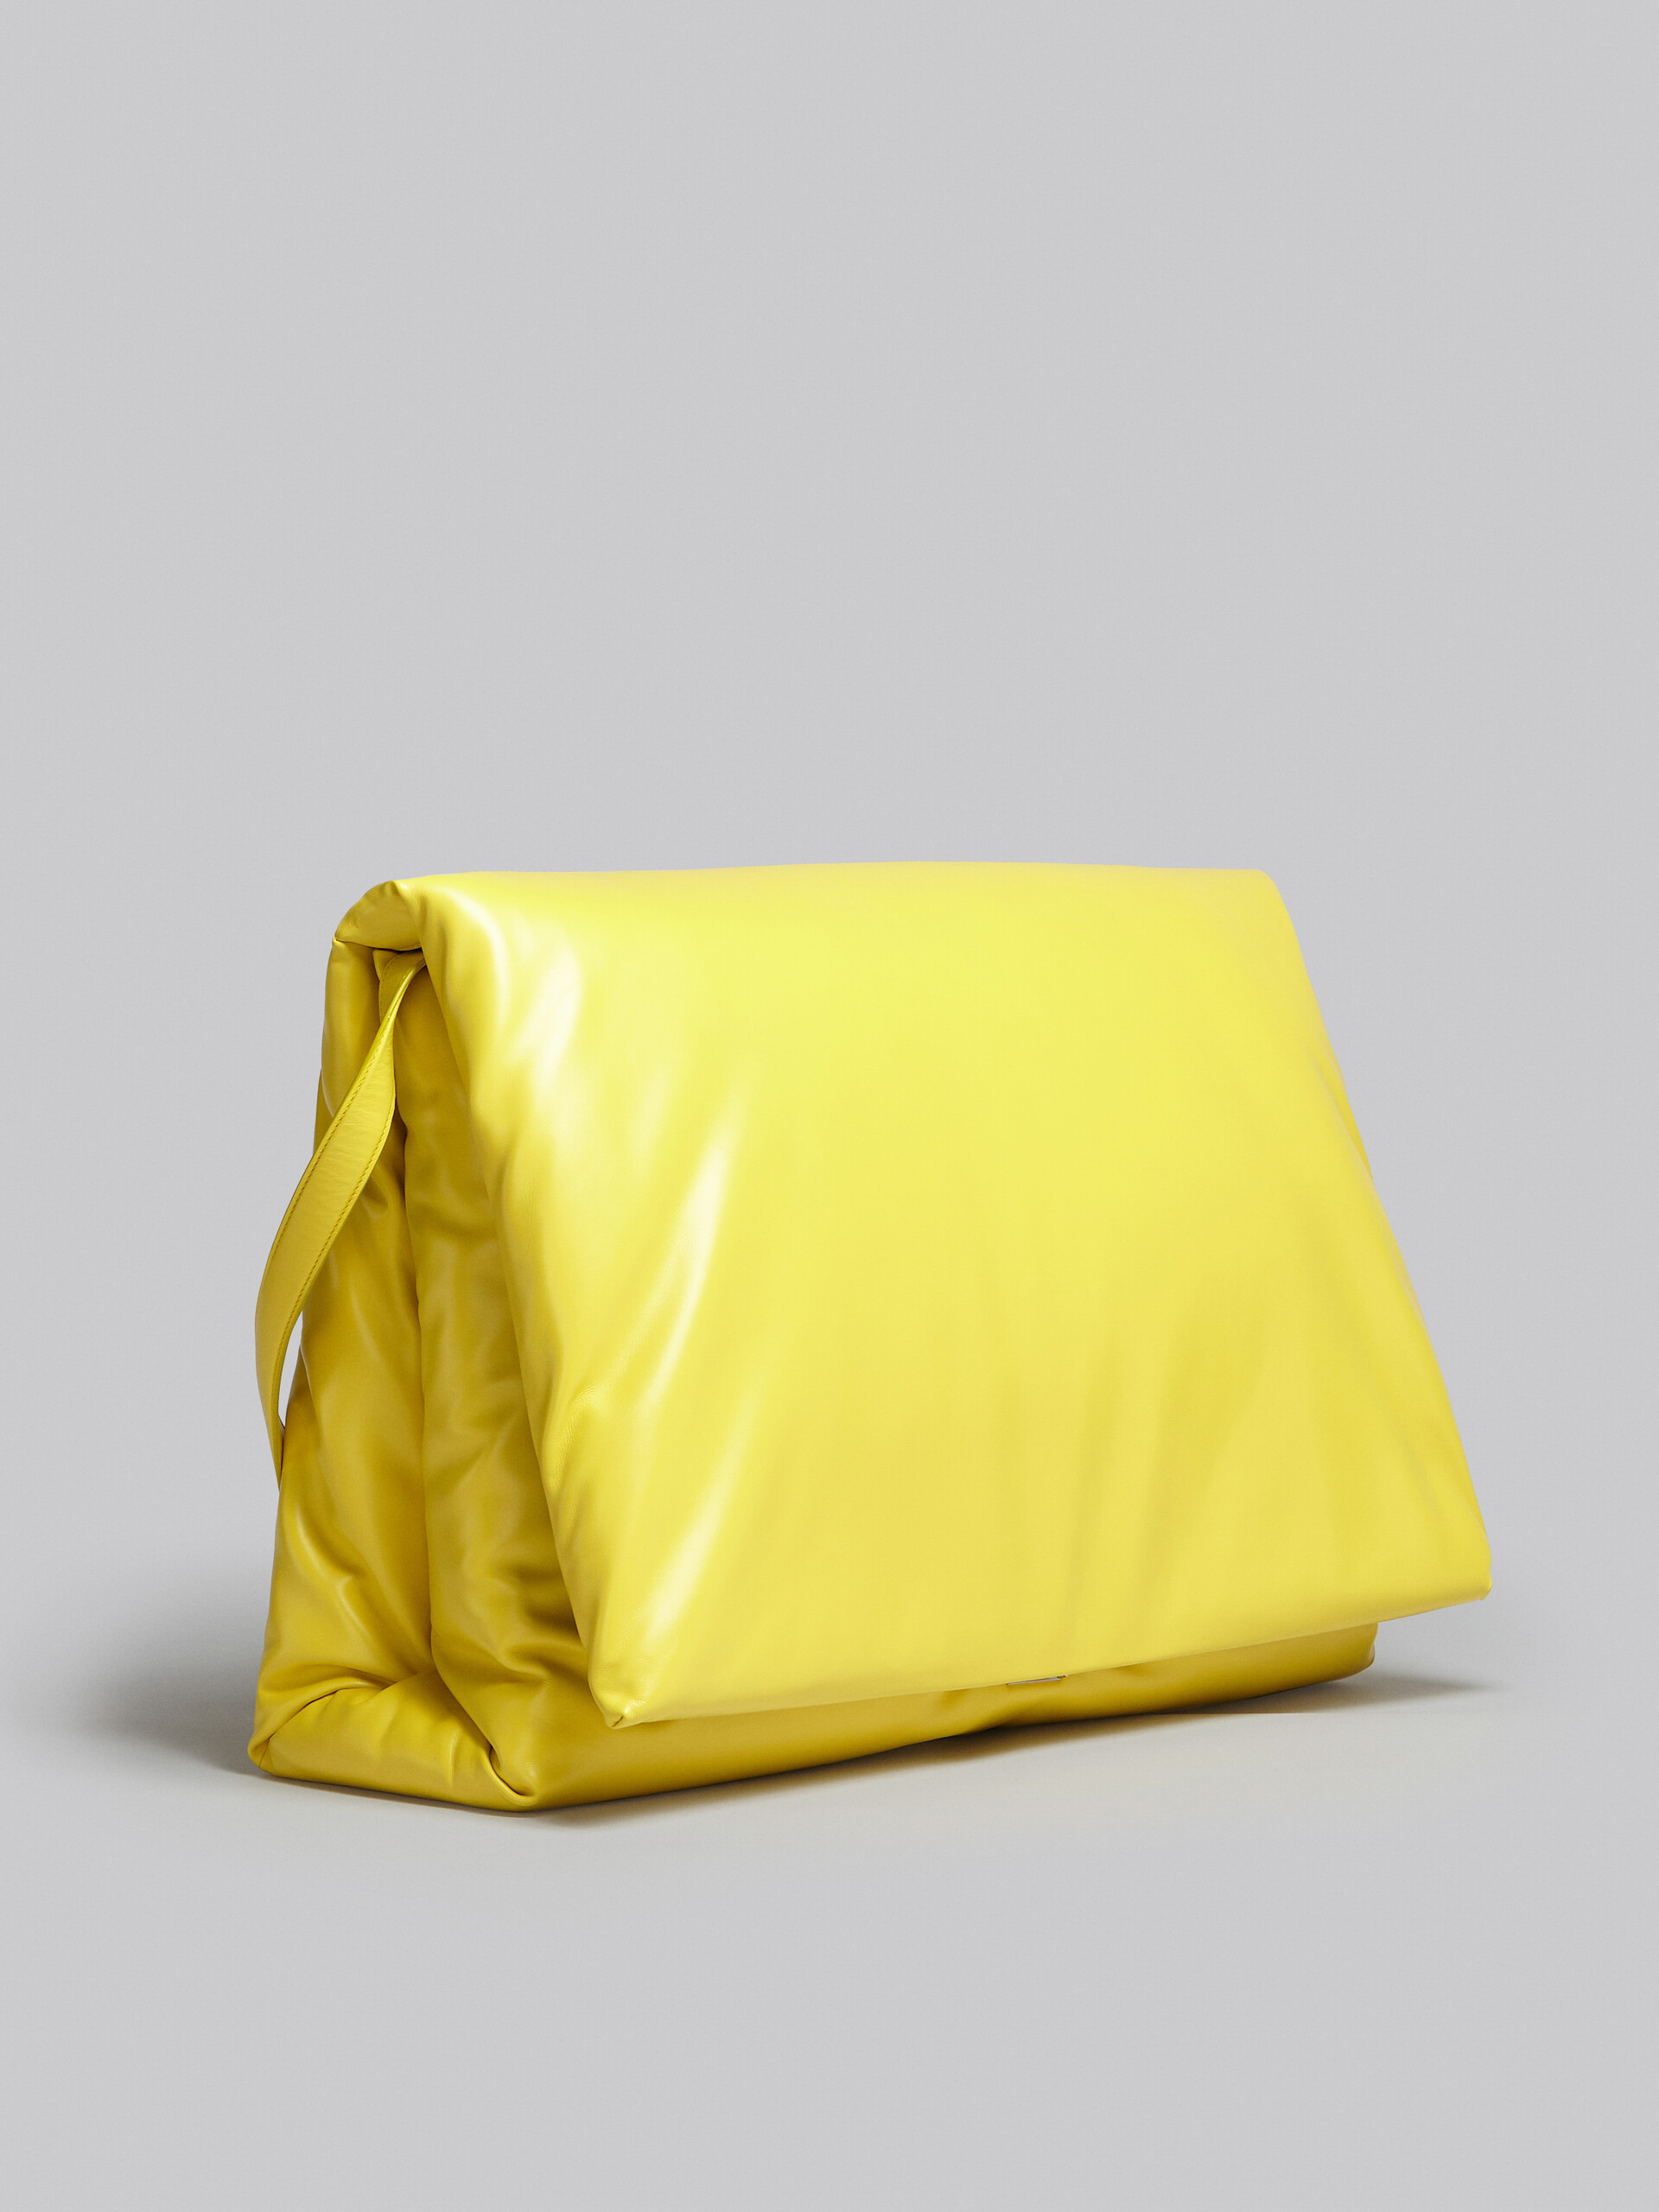 Maxi yellow calsfkin Prisma bag - Shoulder Bag - Image 6